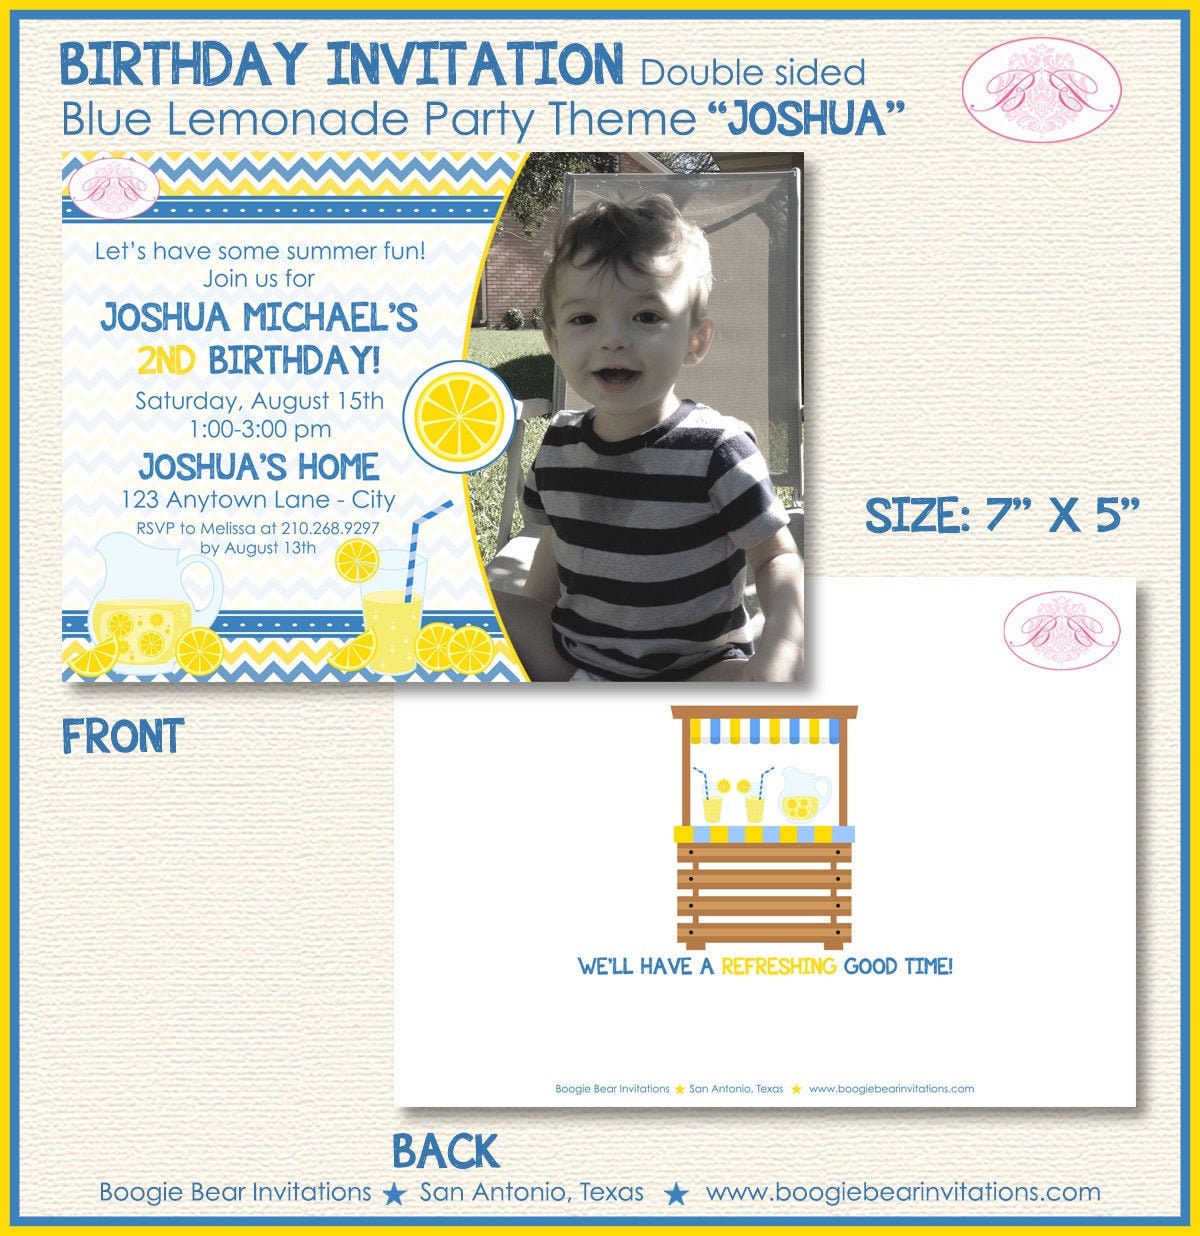 Blue Lemonade Birthday Party Invitation Boy Photo Lemon Refreshing Drink Boogie Bear Invitations Joshua Theme Paperless Printable Printed